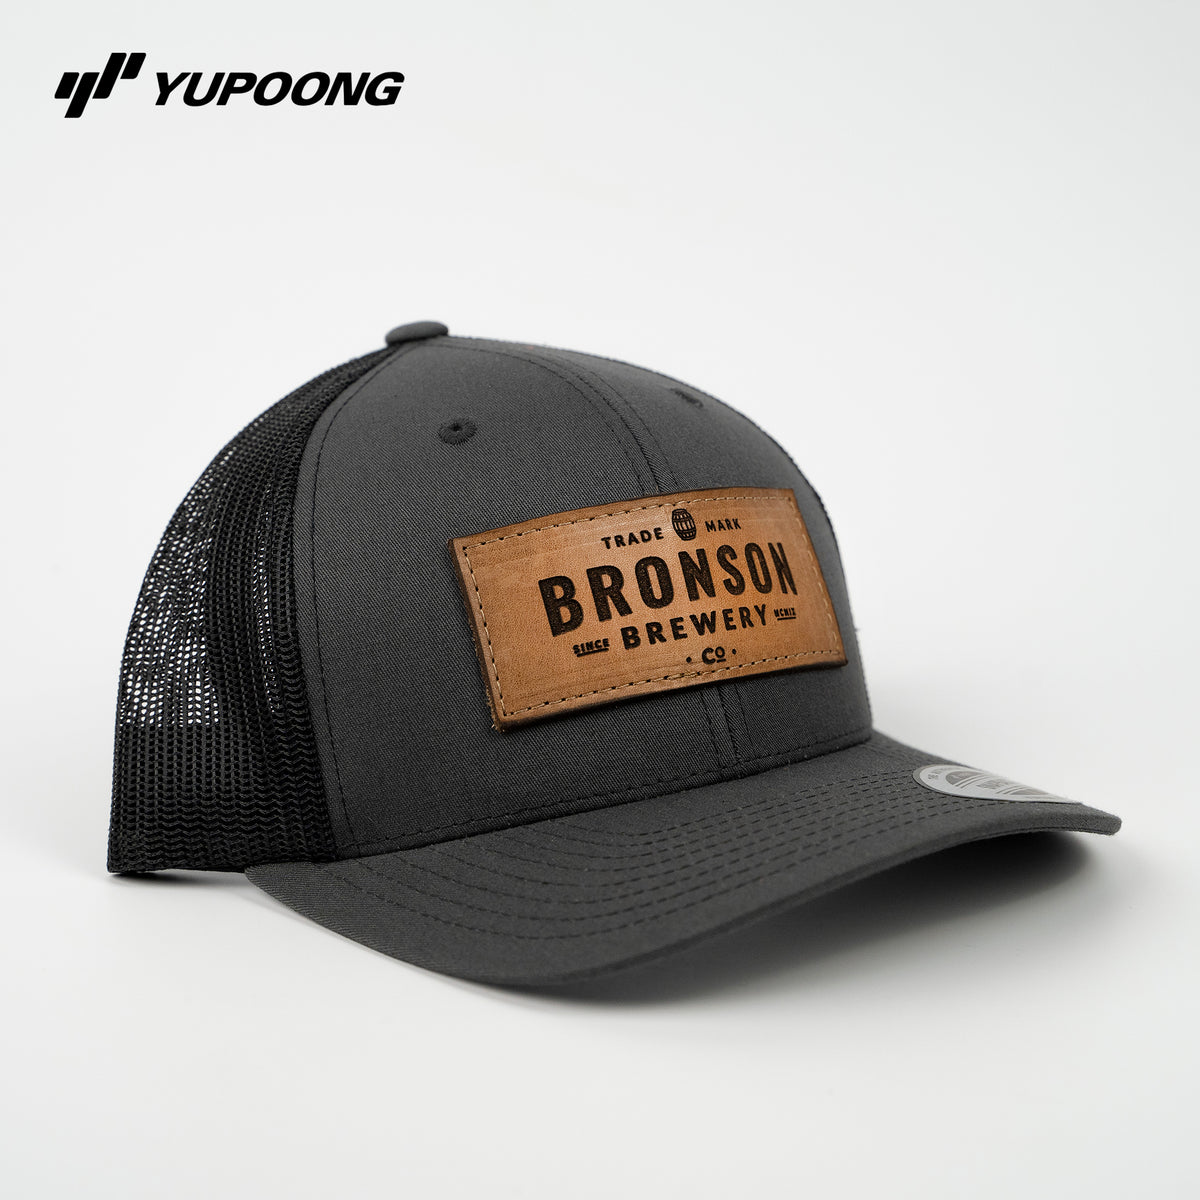 Yupoong 6606 Custom Mesh Snapback Trucker Hat with YOUR LOGO